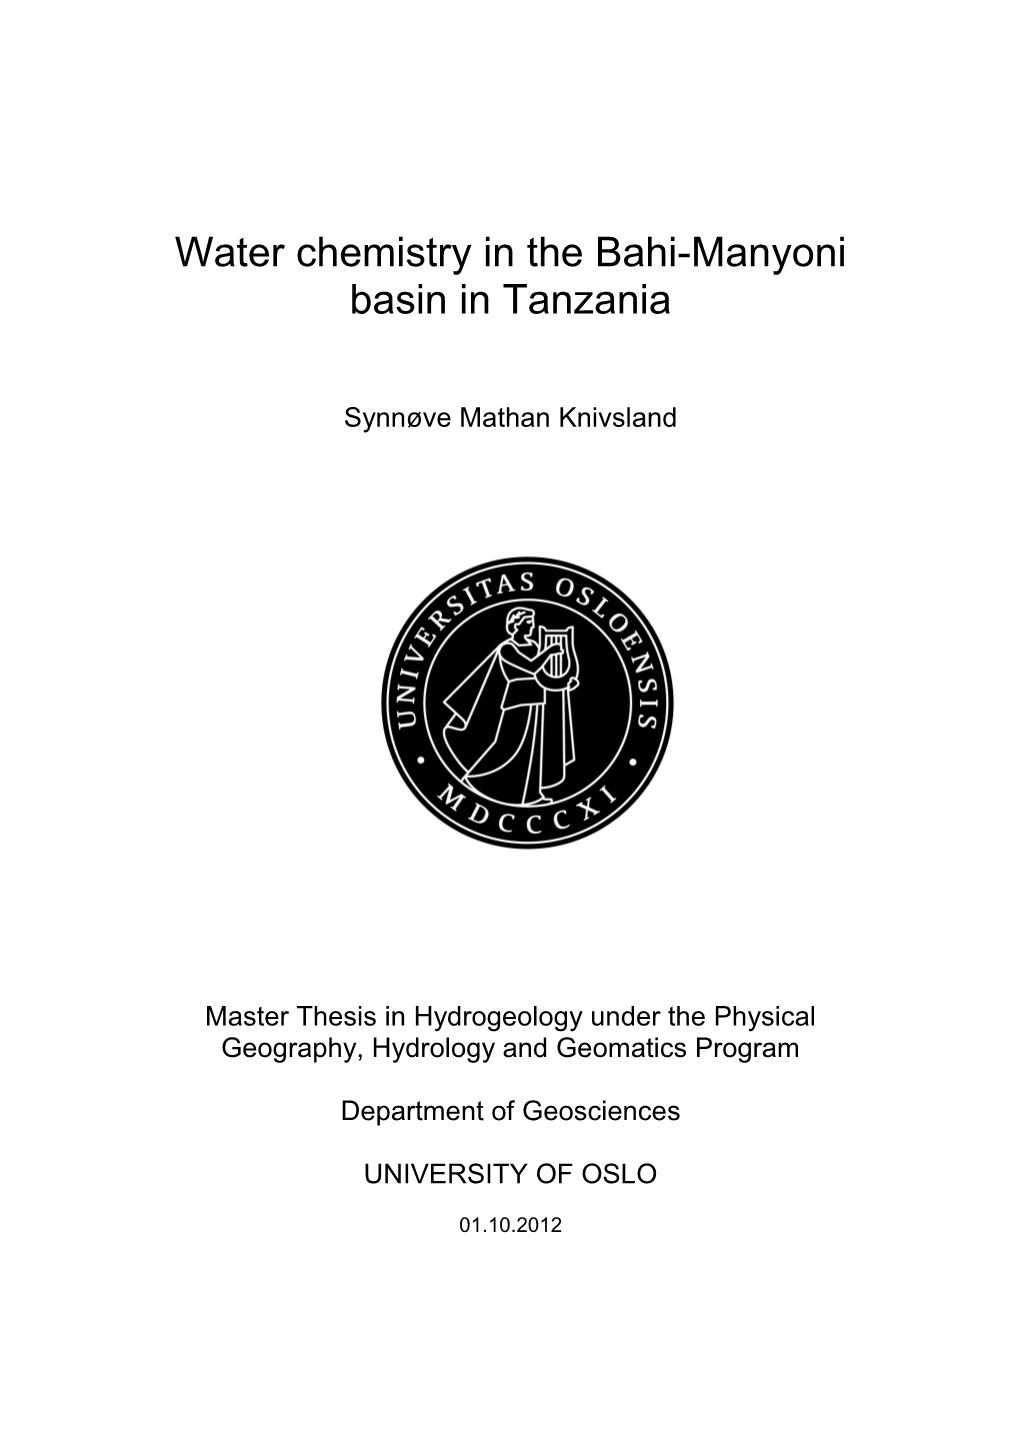 Water Chemistry in the Bahi-Manyoni Basin in Tanzania